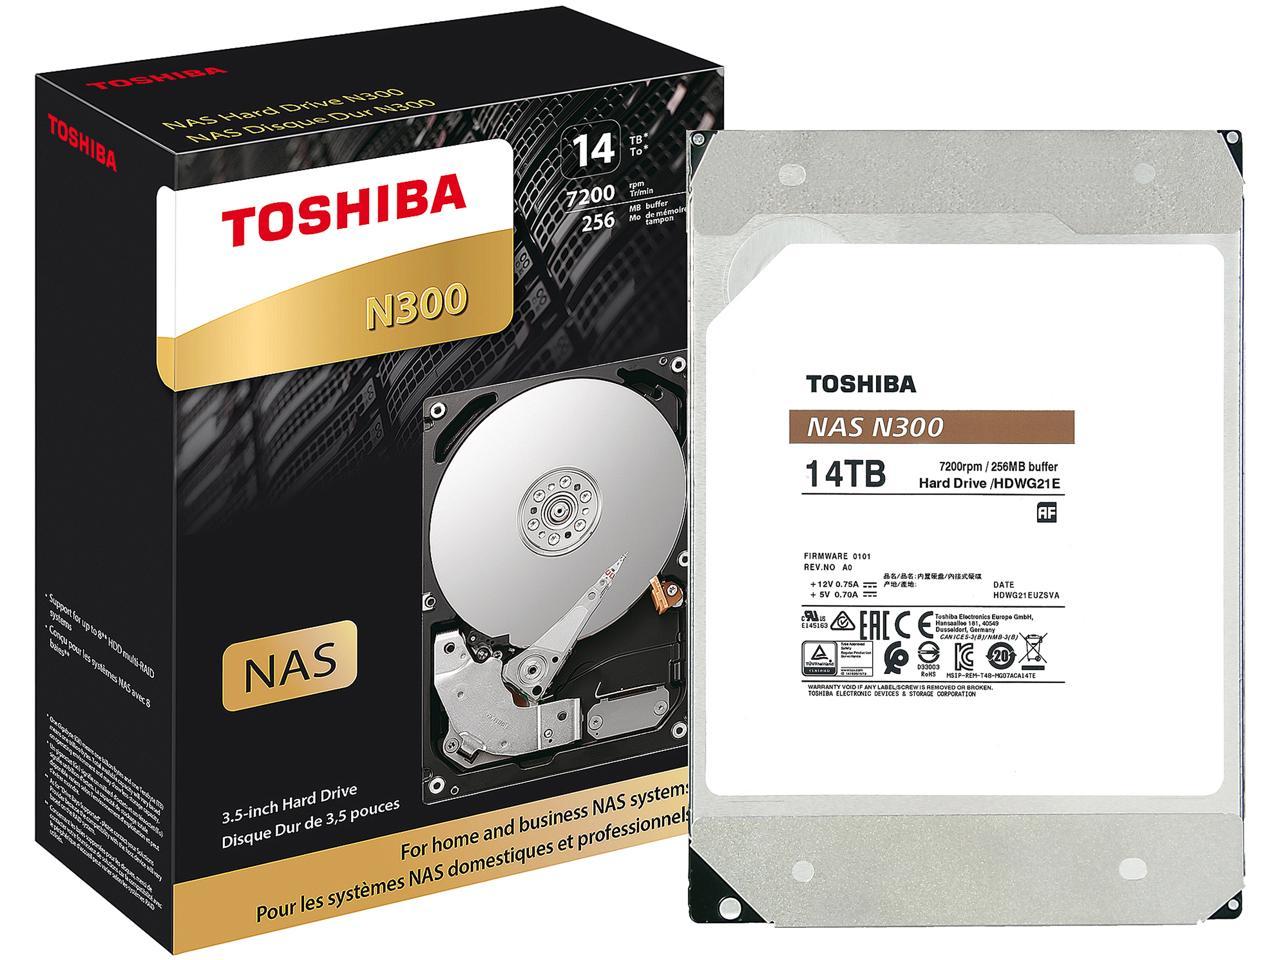 Toshiba N300 Hdwg21Exzsta 14Tb 7200 Rpm 256Mb Cache Sata 6.0Gb/S 3.5" Internal Hard Drive